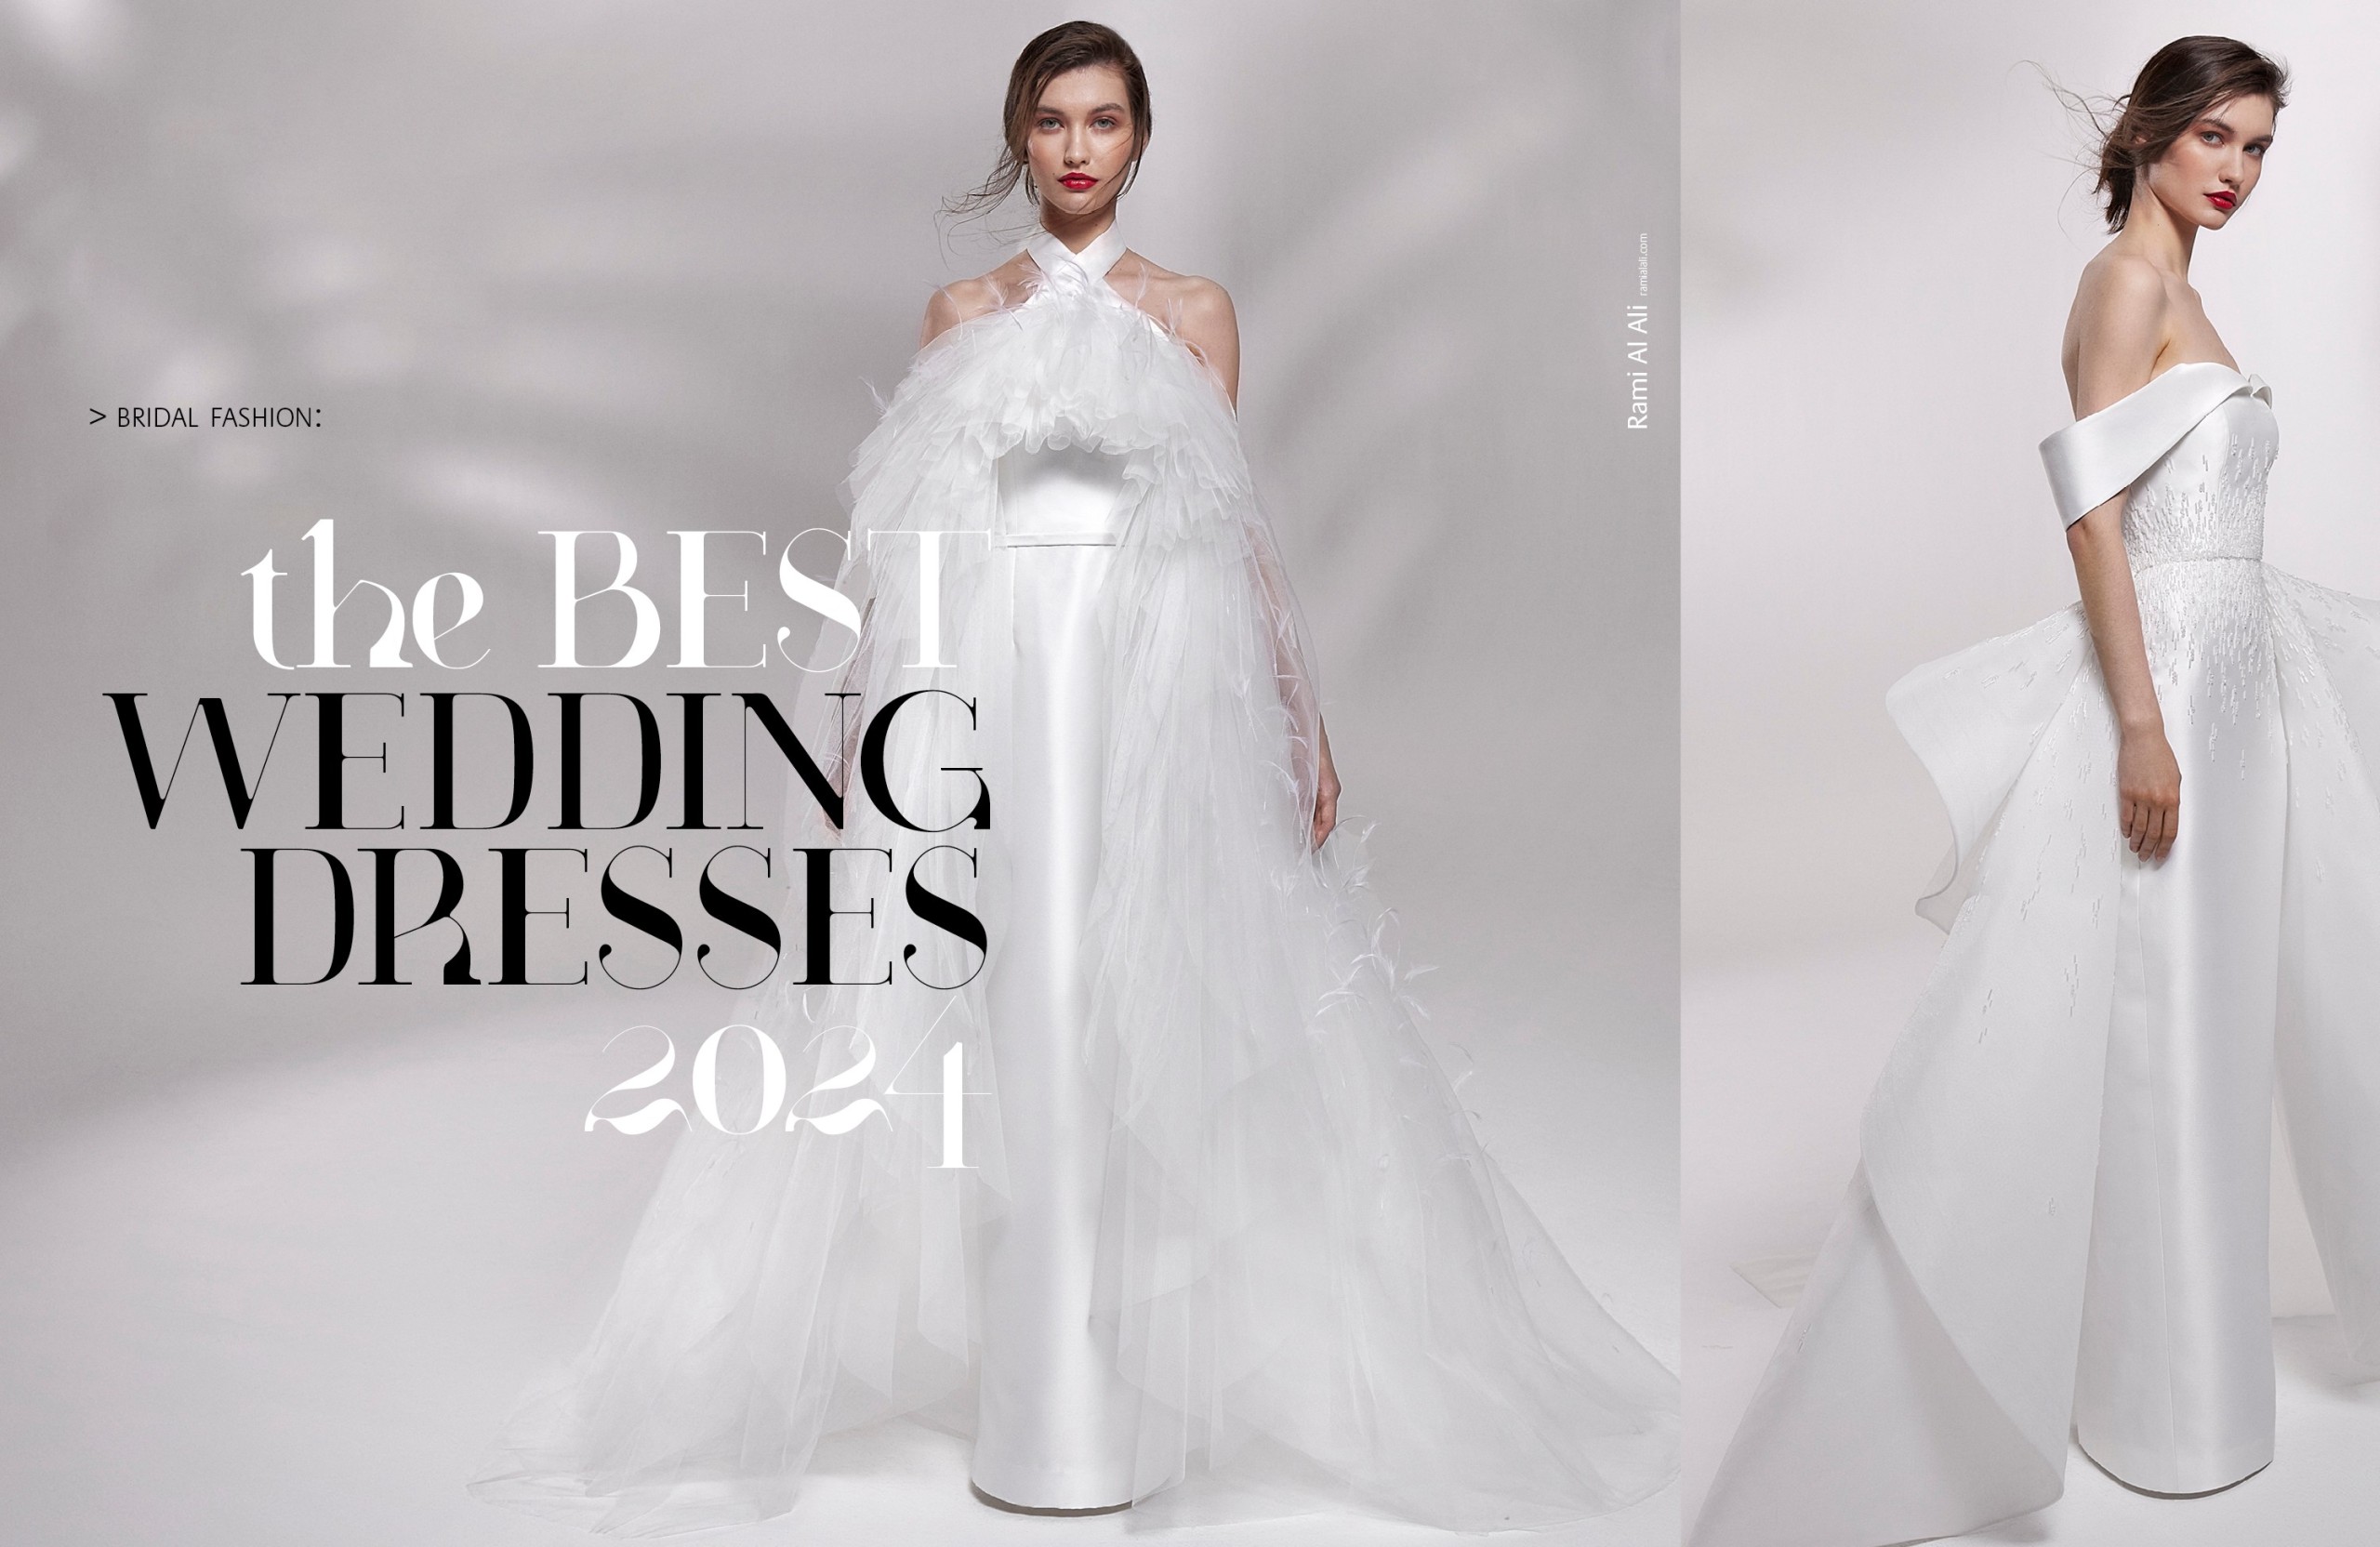 The Best Weddings Dresses 2024 